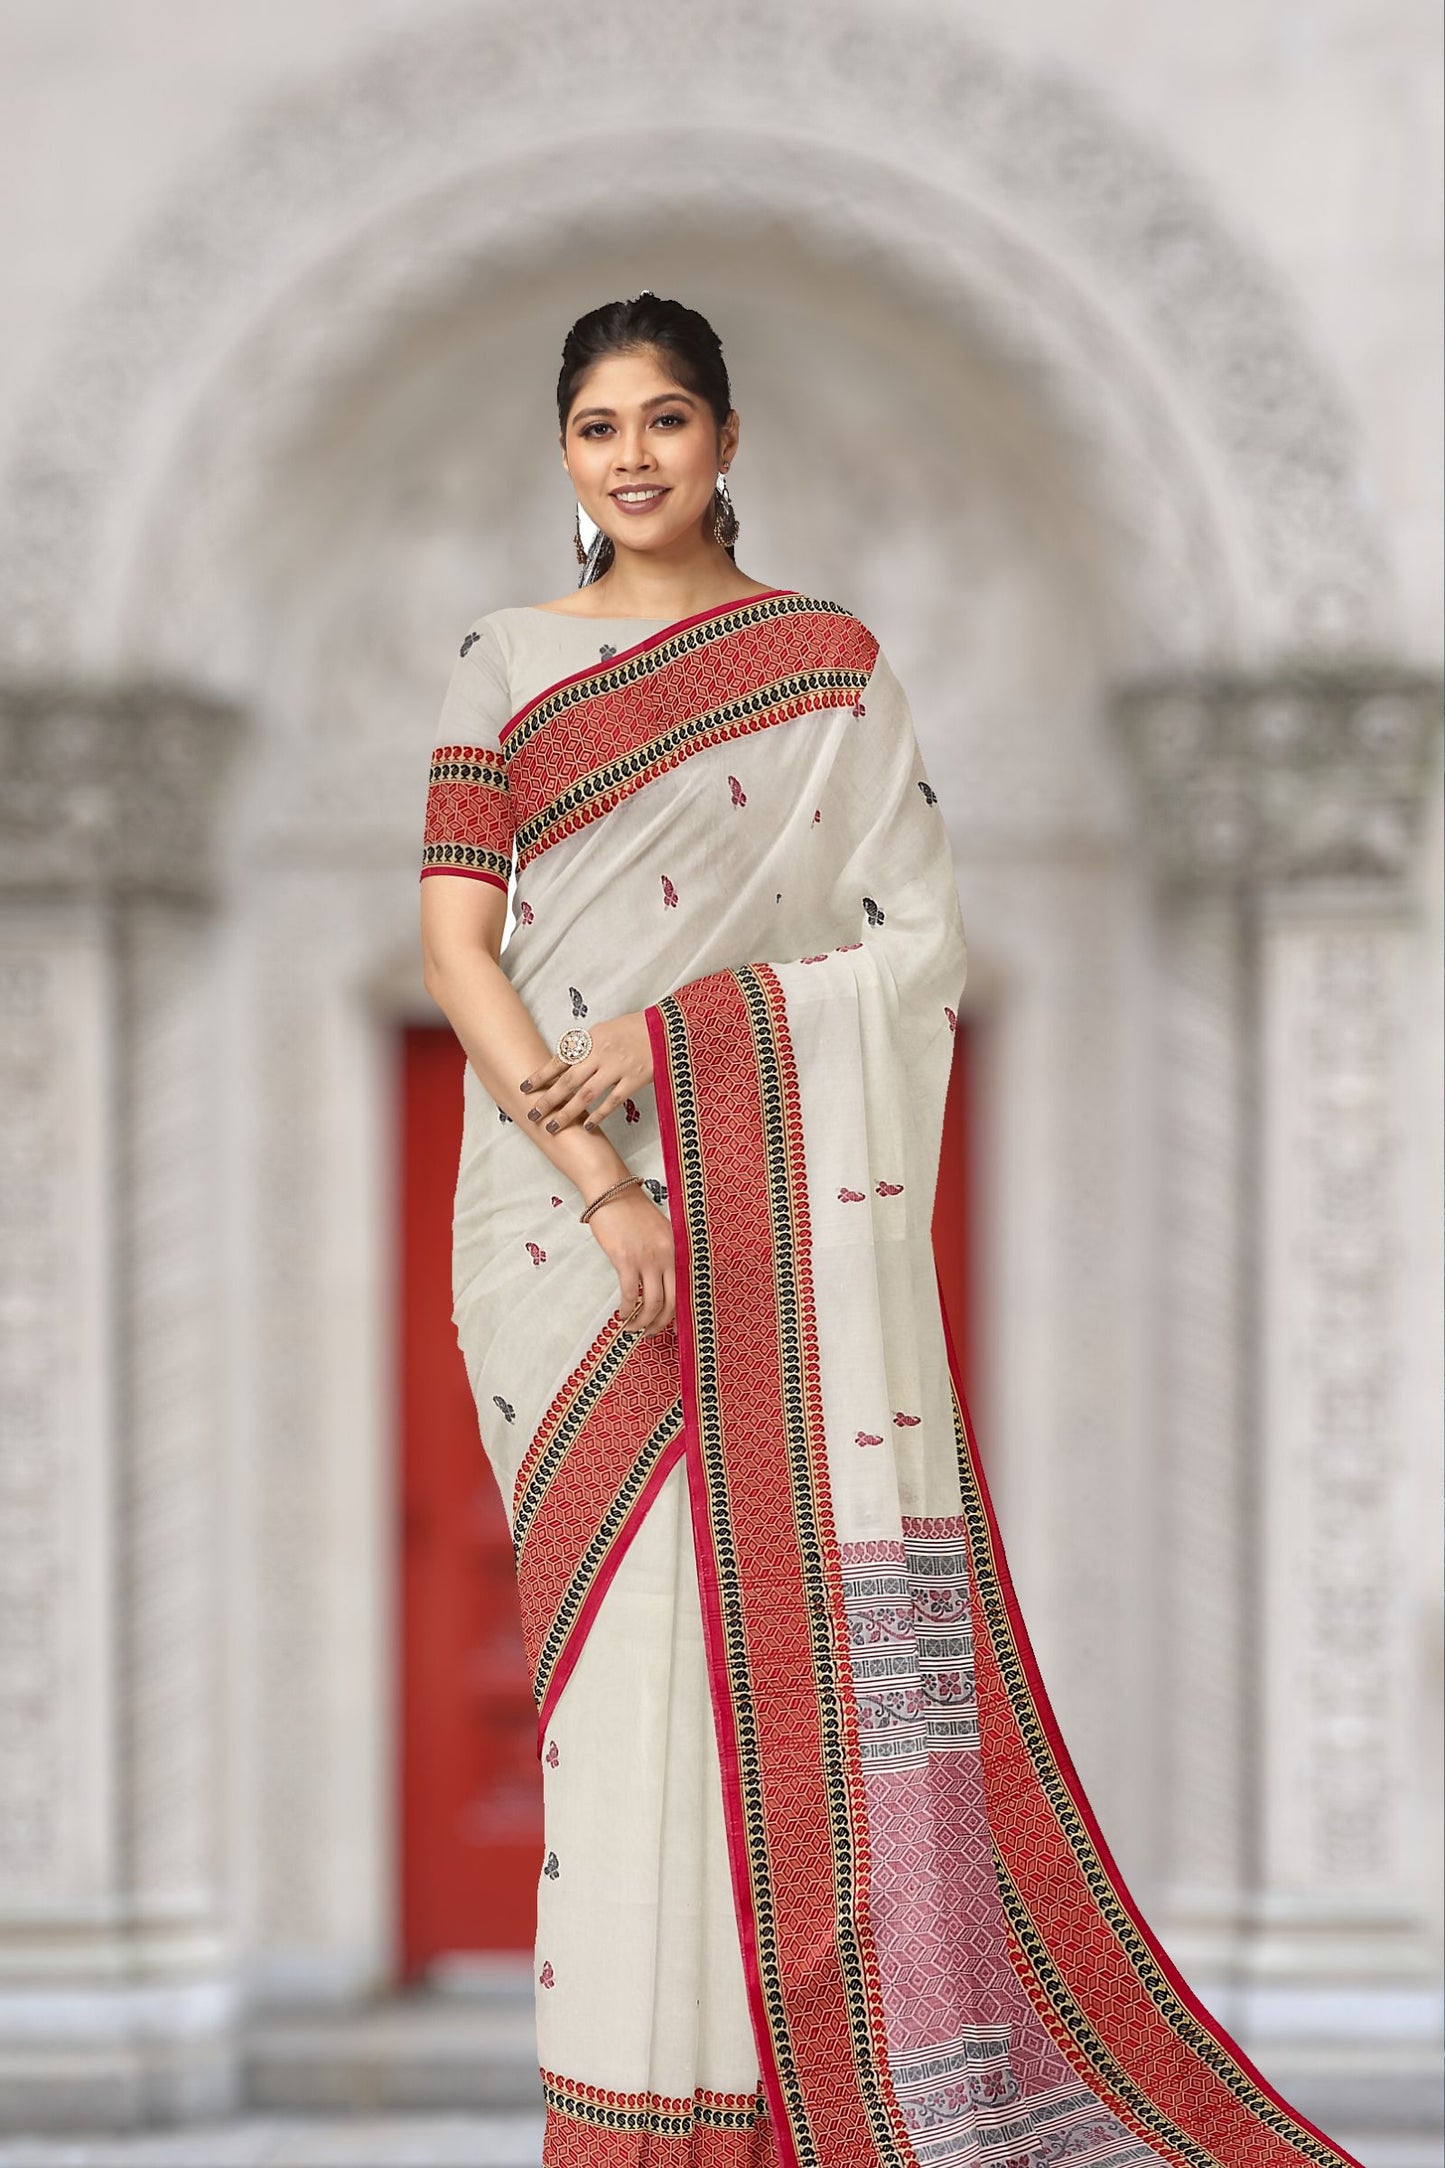 Off-White, Traditional Design Bengal Soft  Handloom Cotton Saree